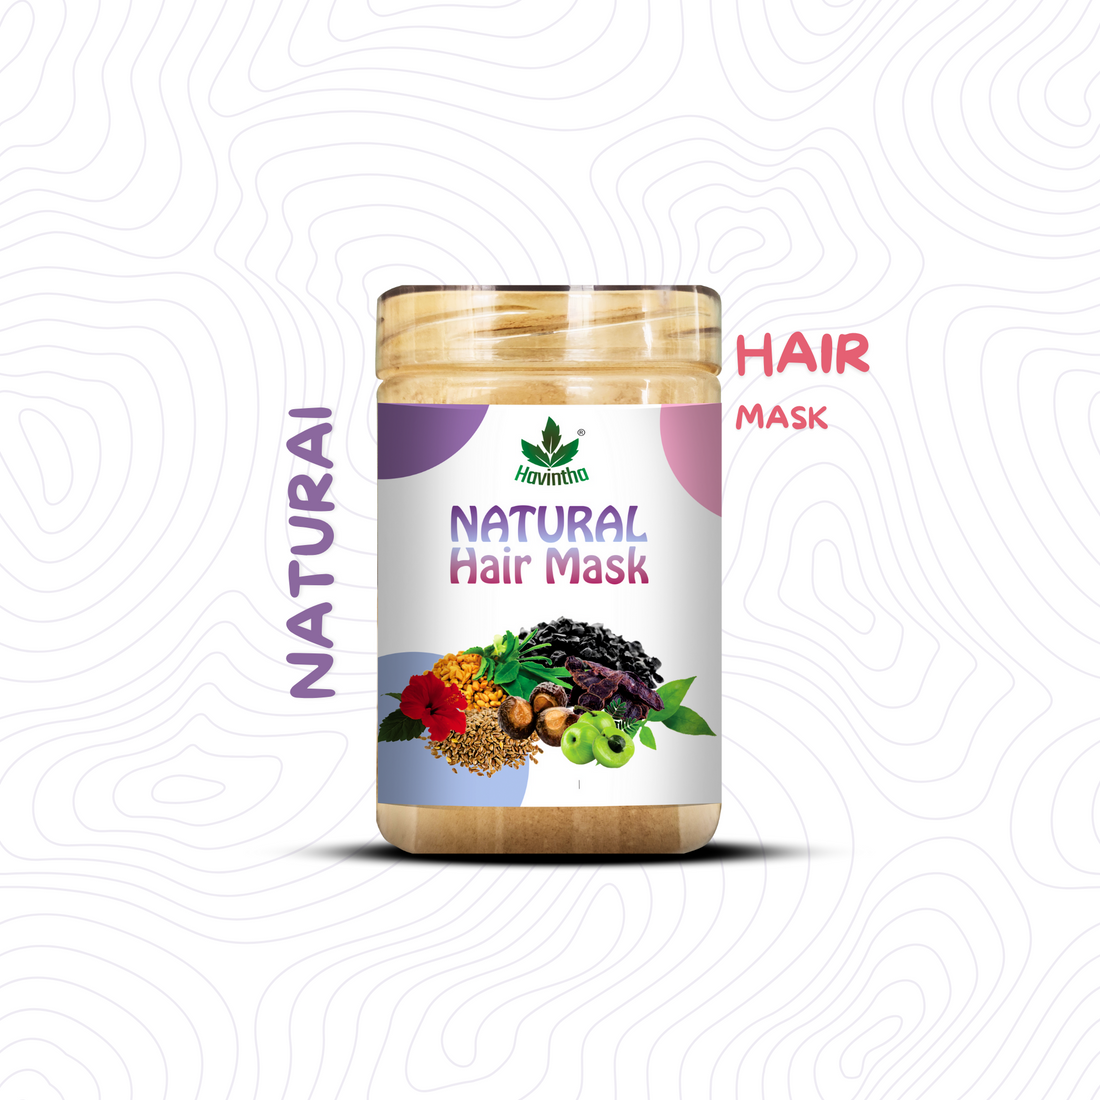 Havintha Natural Hair Mask Powder for Dandruff, Hair Fall, and Hair Growth | Natural, Aromatic, Ayurvedic Hair Mask with Herbal Ingredients- 227 grams